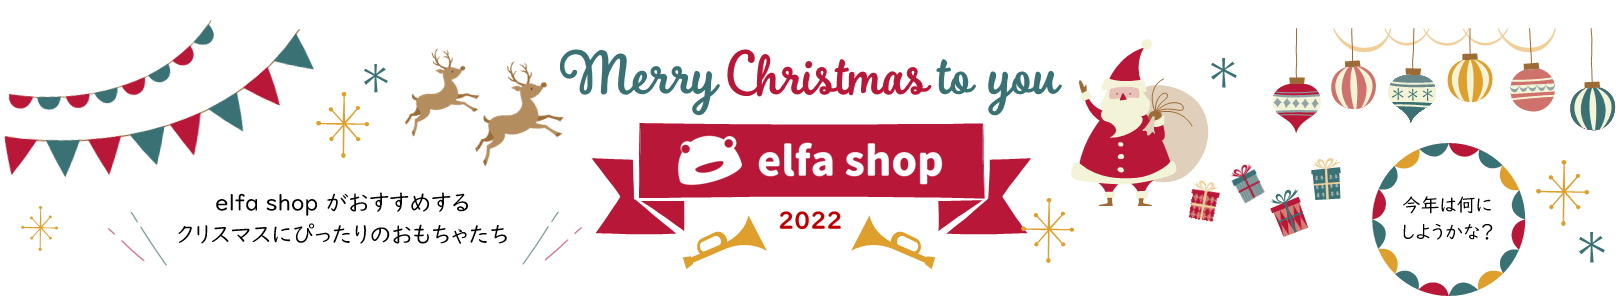 🎅 elfa shopがオススメするクリスマスプレゼント 🎁